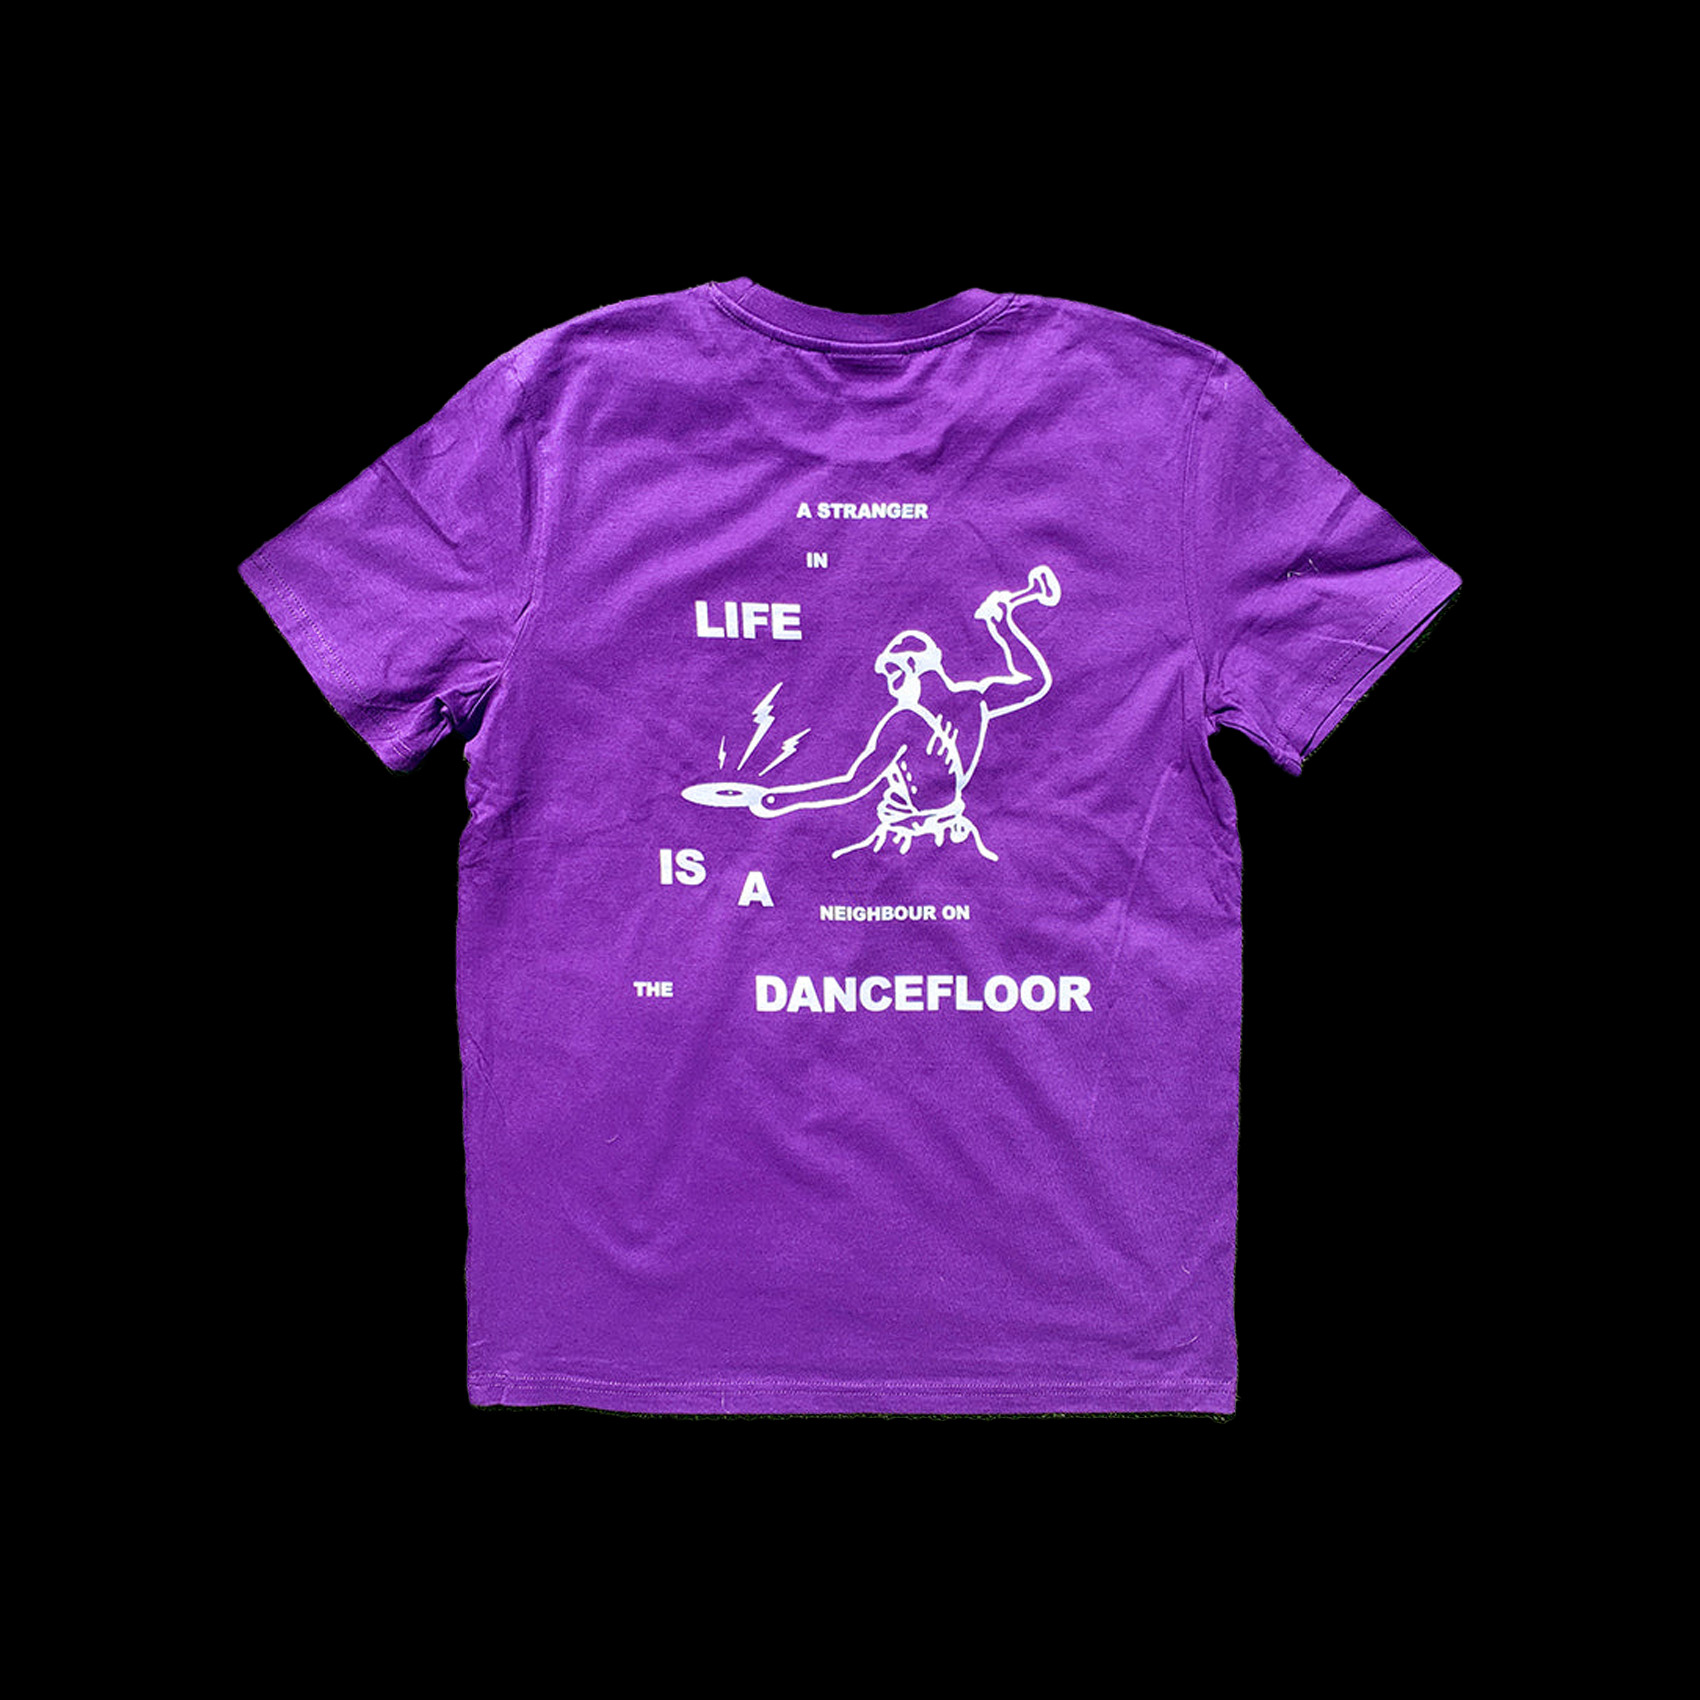 Dancefloor shirt – purple – Limited to 150